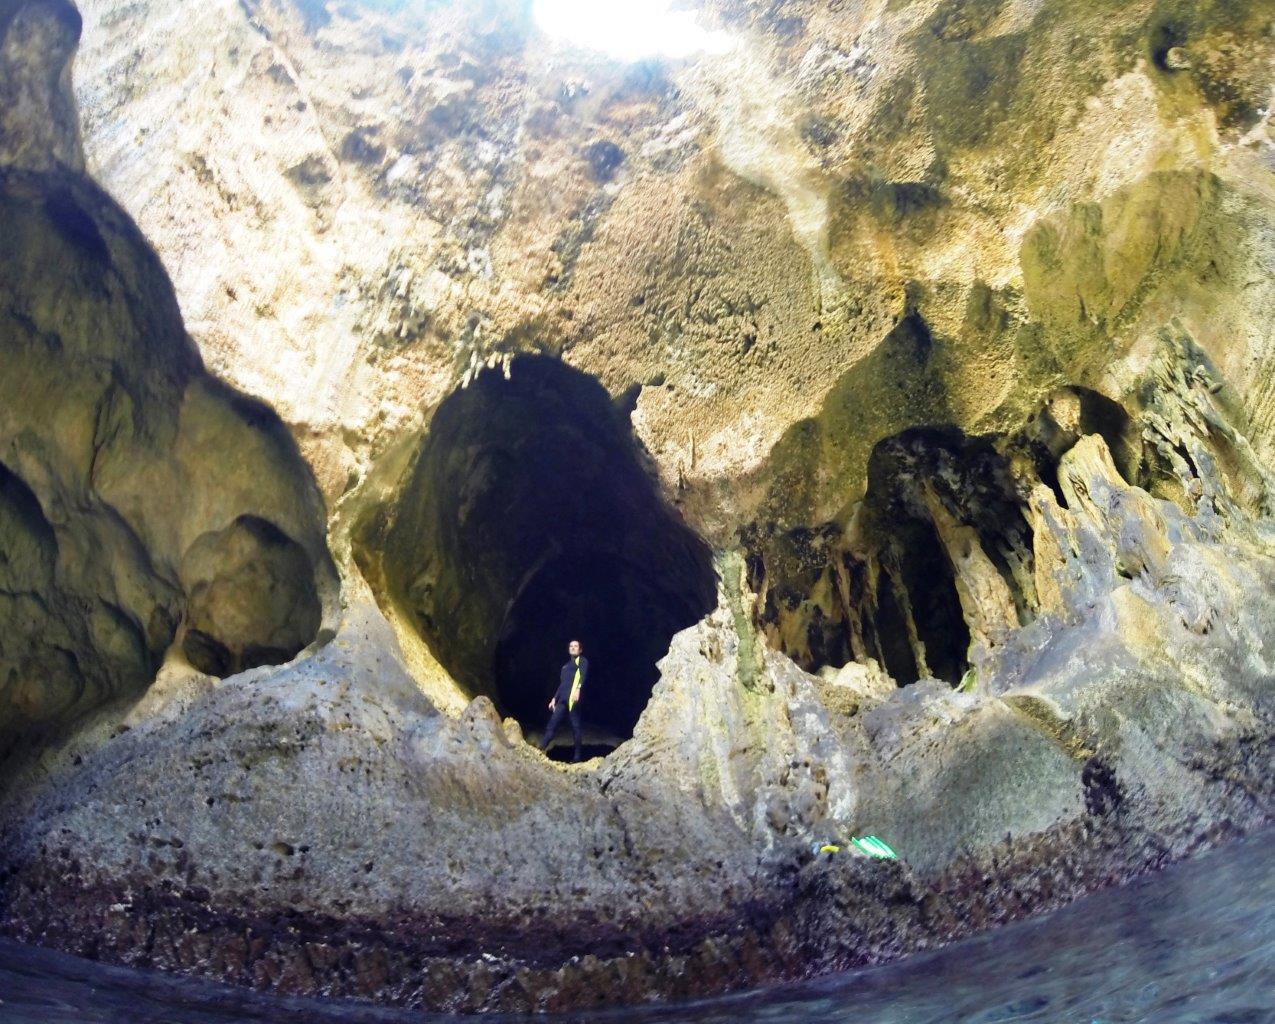 Climbing inside caves